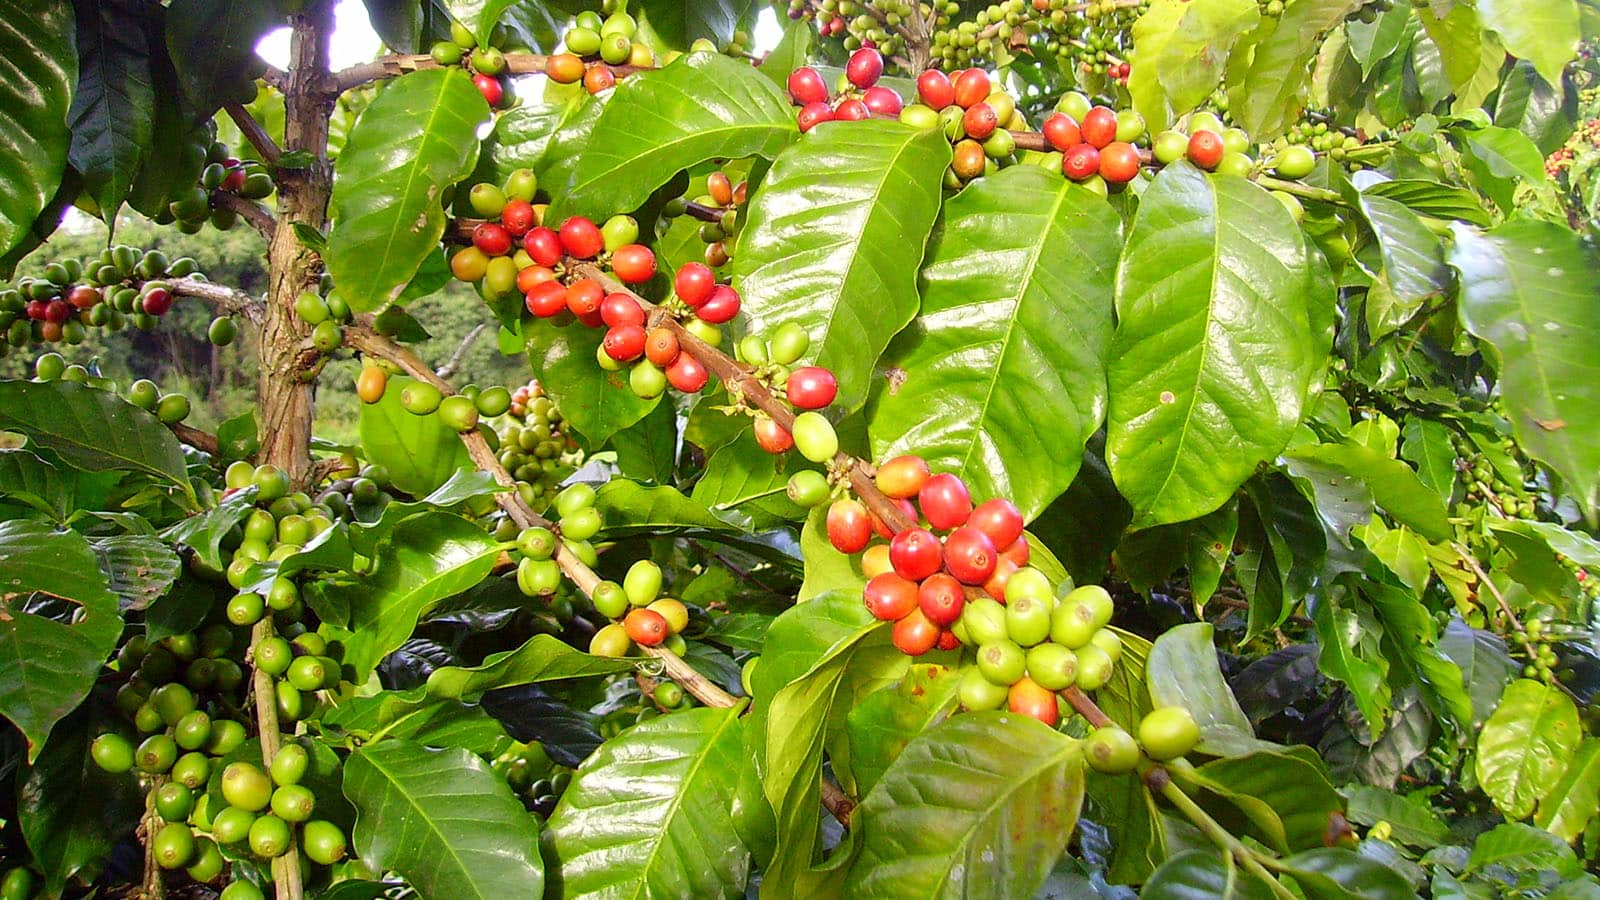 Organic Arabica Coffee Beans